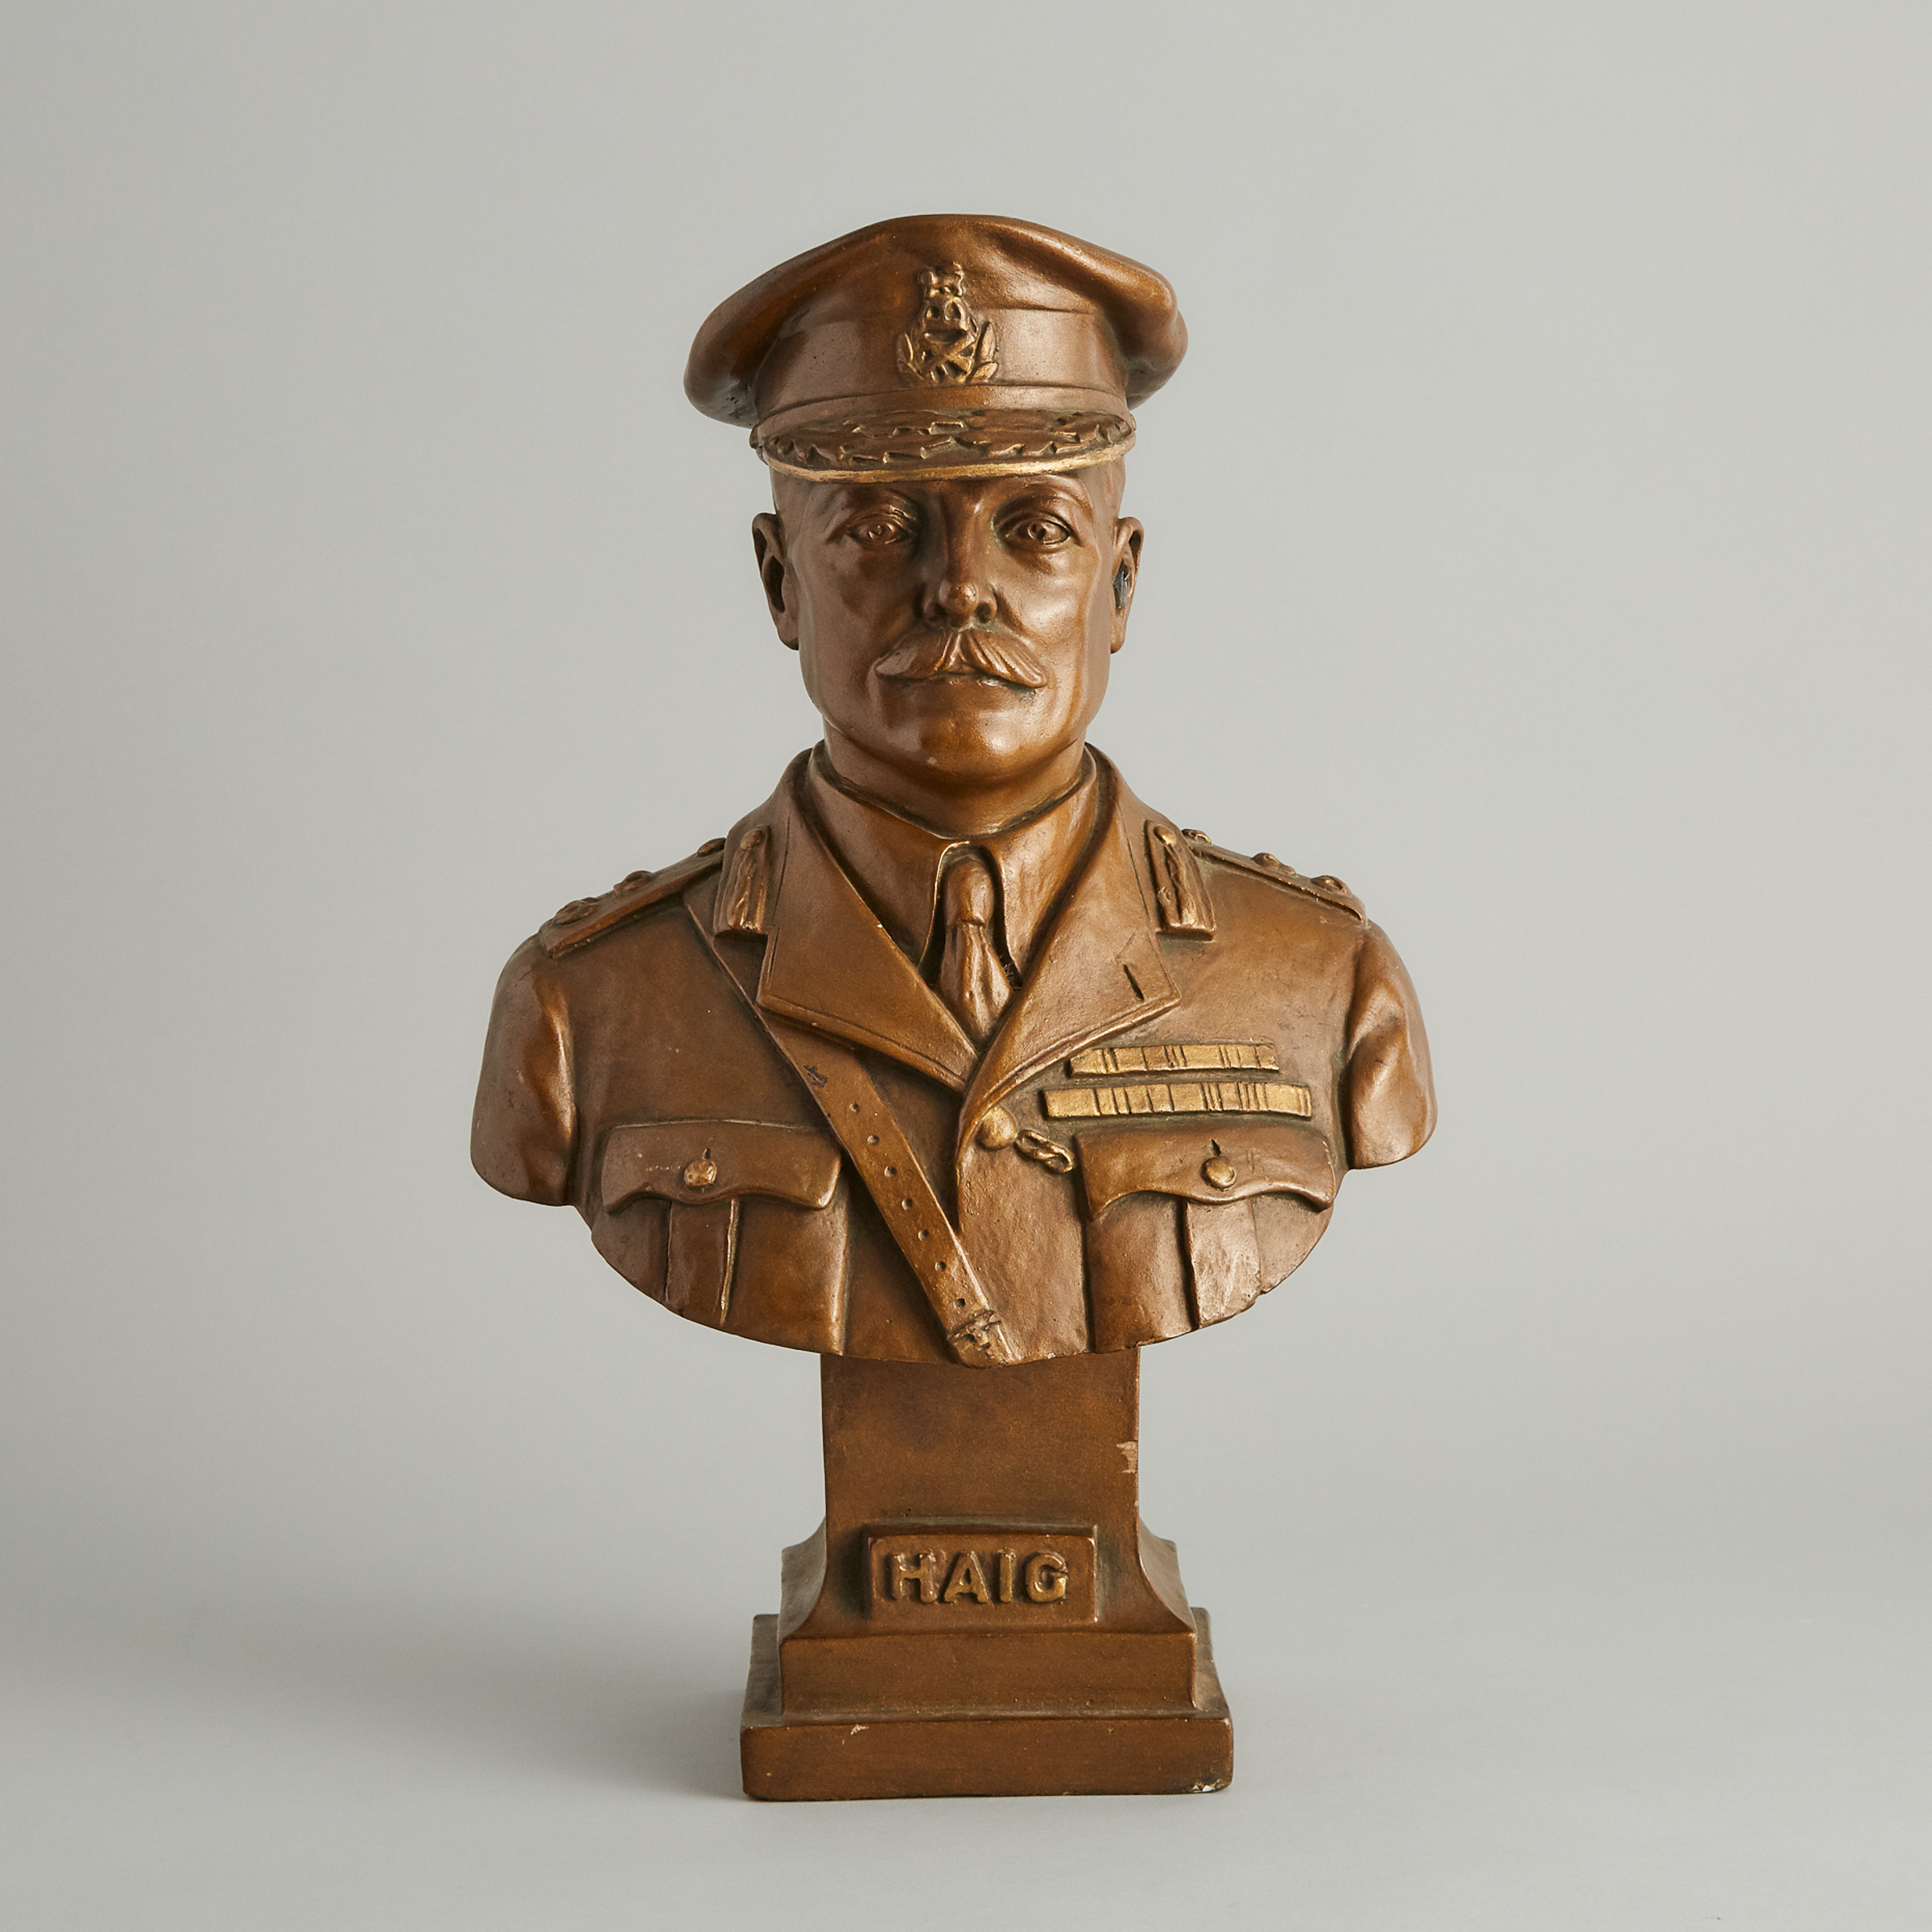 Bust of Field Marshall Lord Douglas Haig, 1st Earl Haig, early 20th century